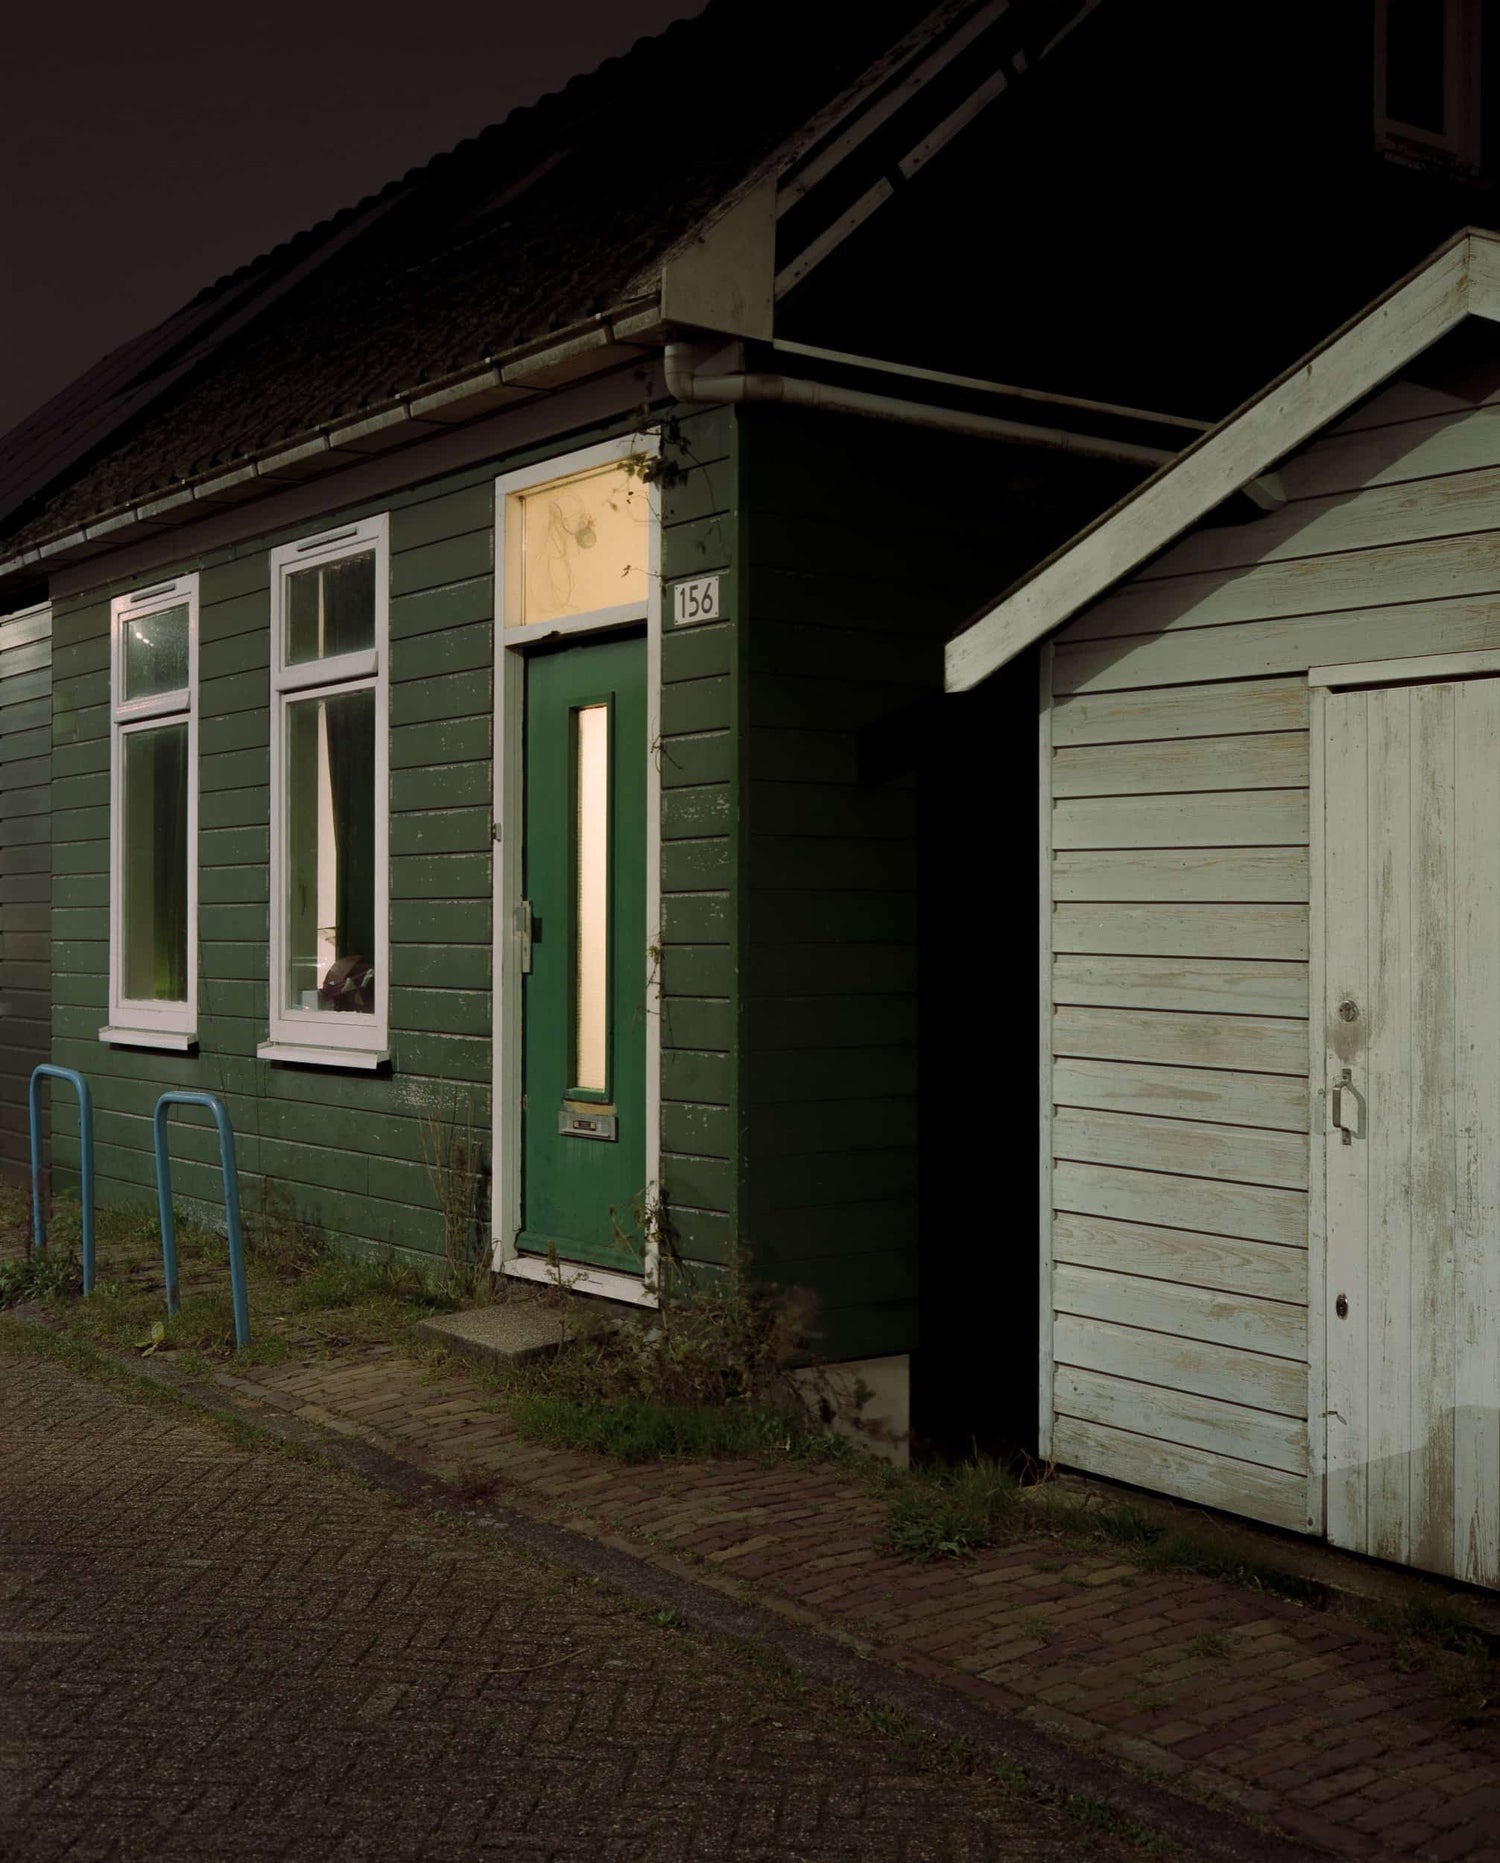 The artpiece 'Amsterdam Noord #4' by Jildo Tim Hof showing an older, green, wooden building in Amsterdam-Noord